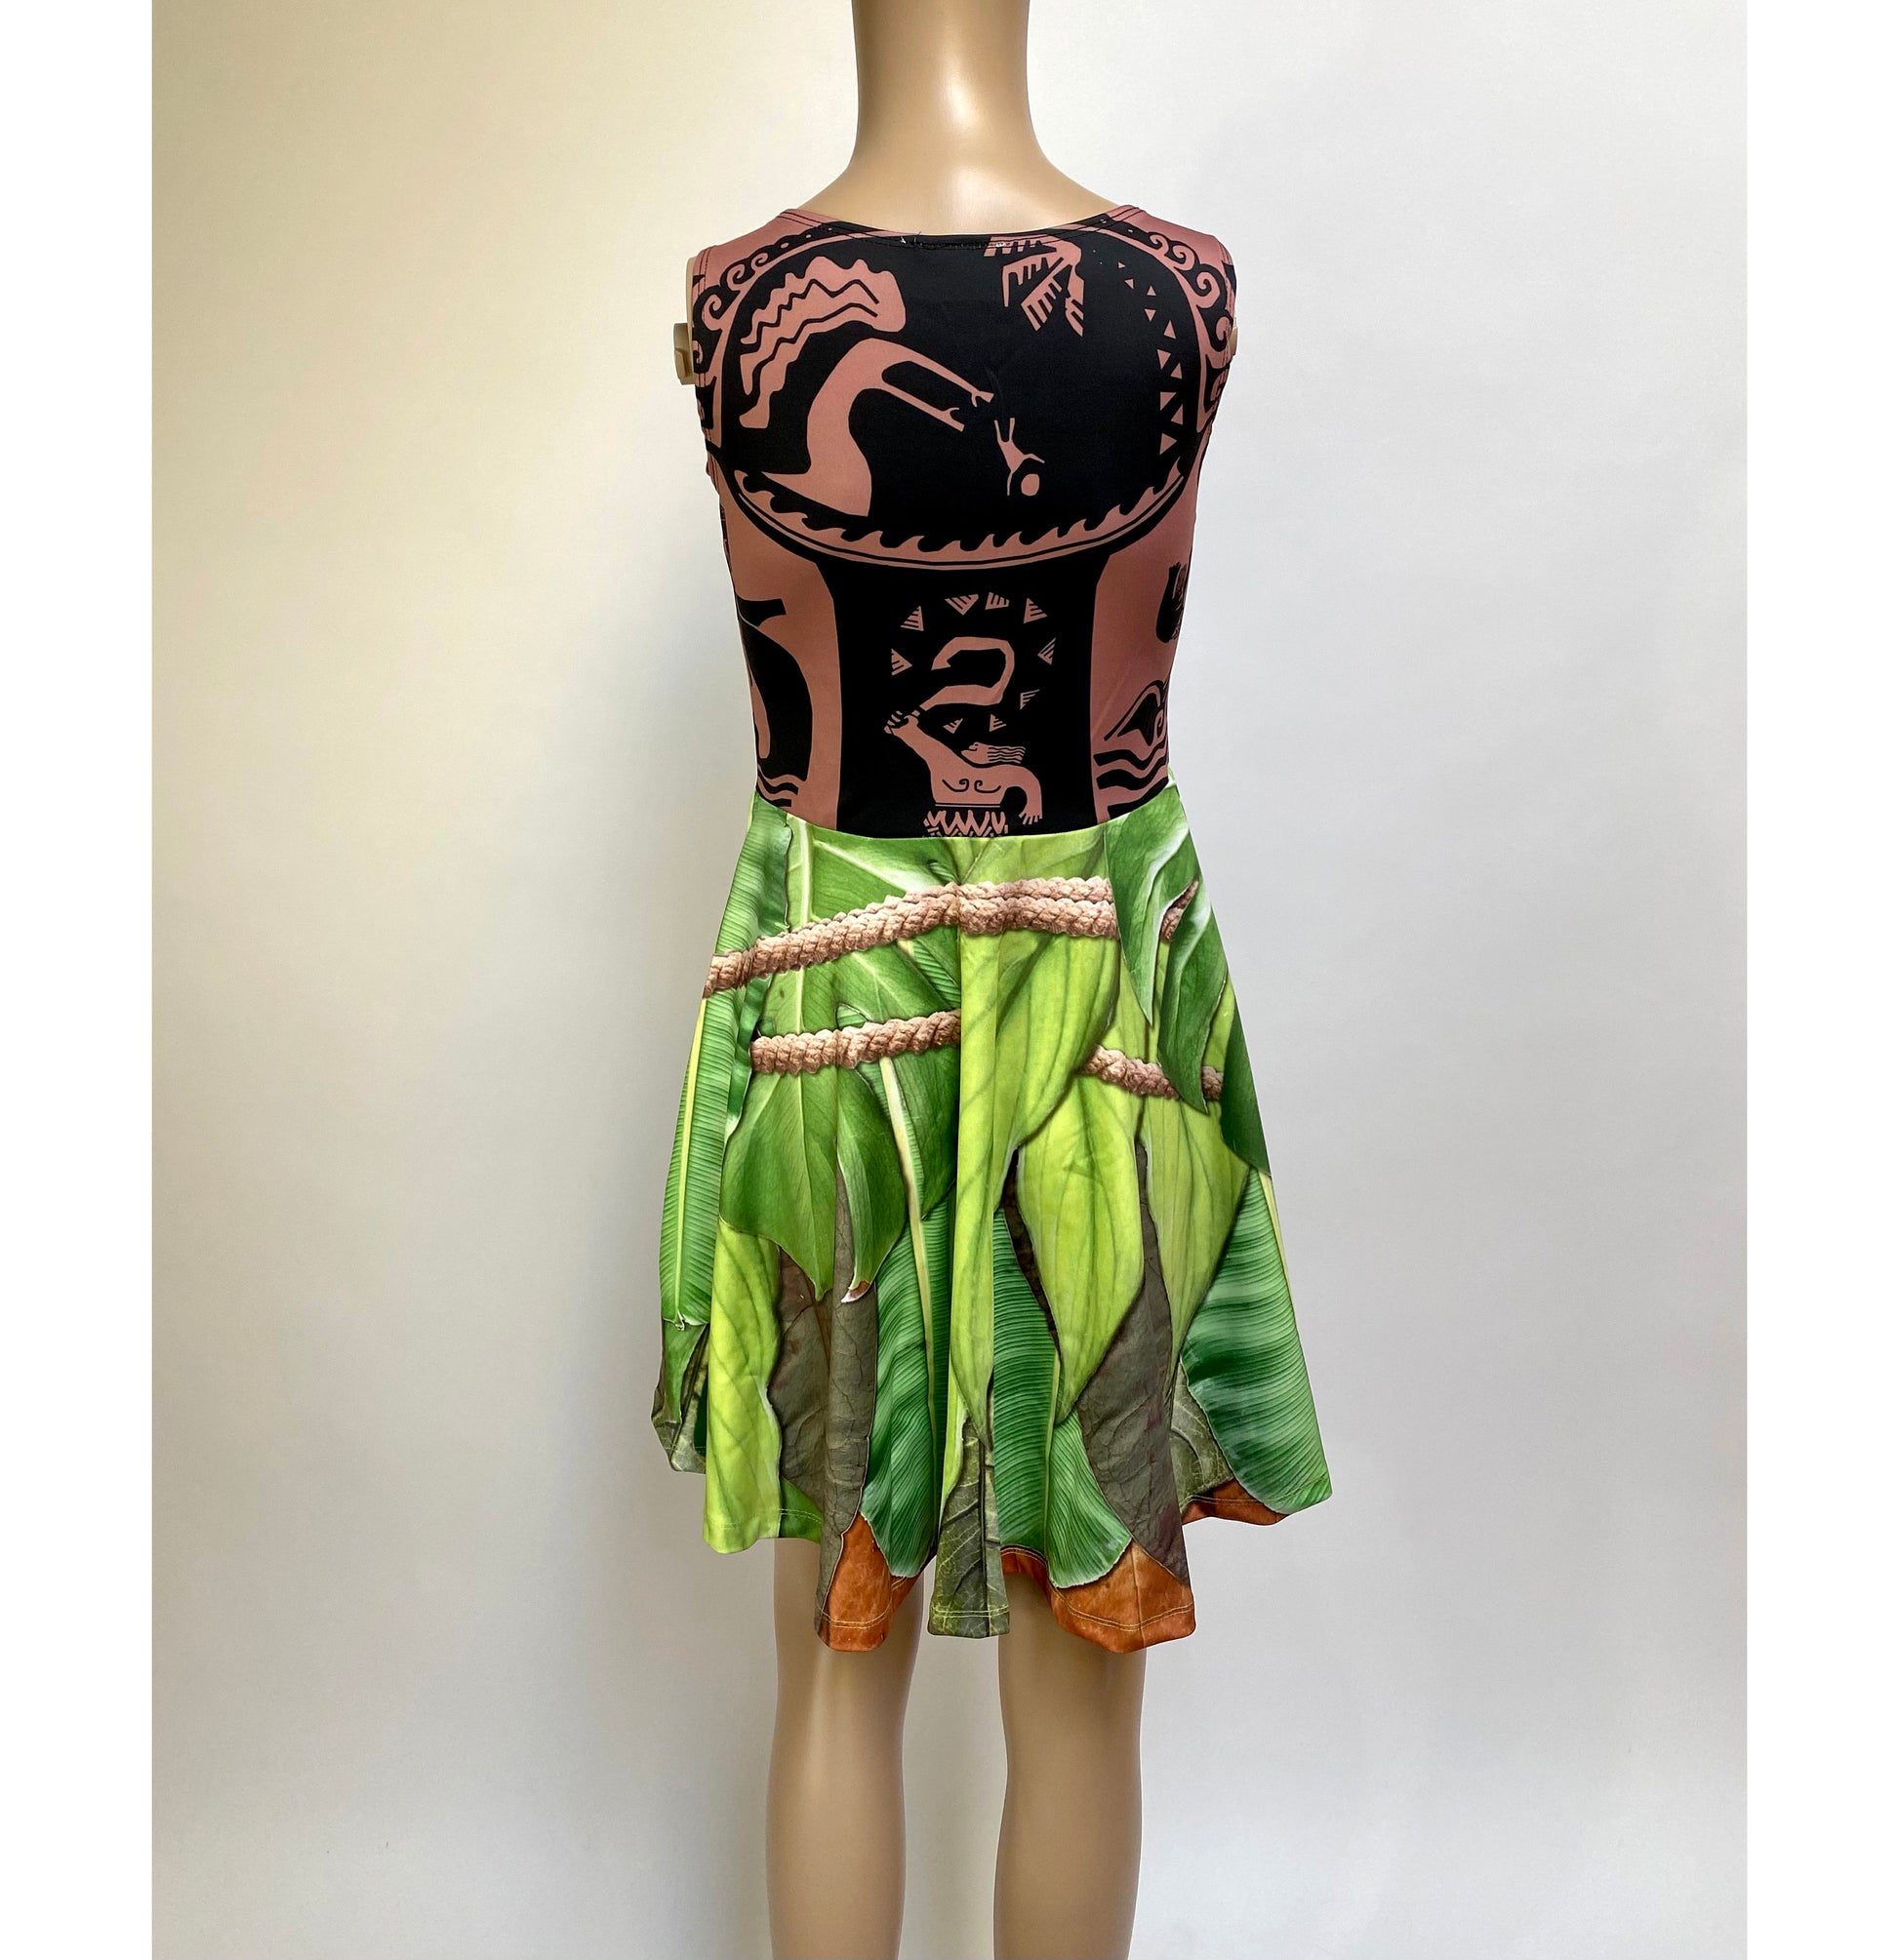 Maui Moana Inspired Skater Dress